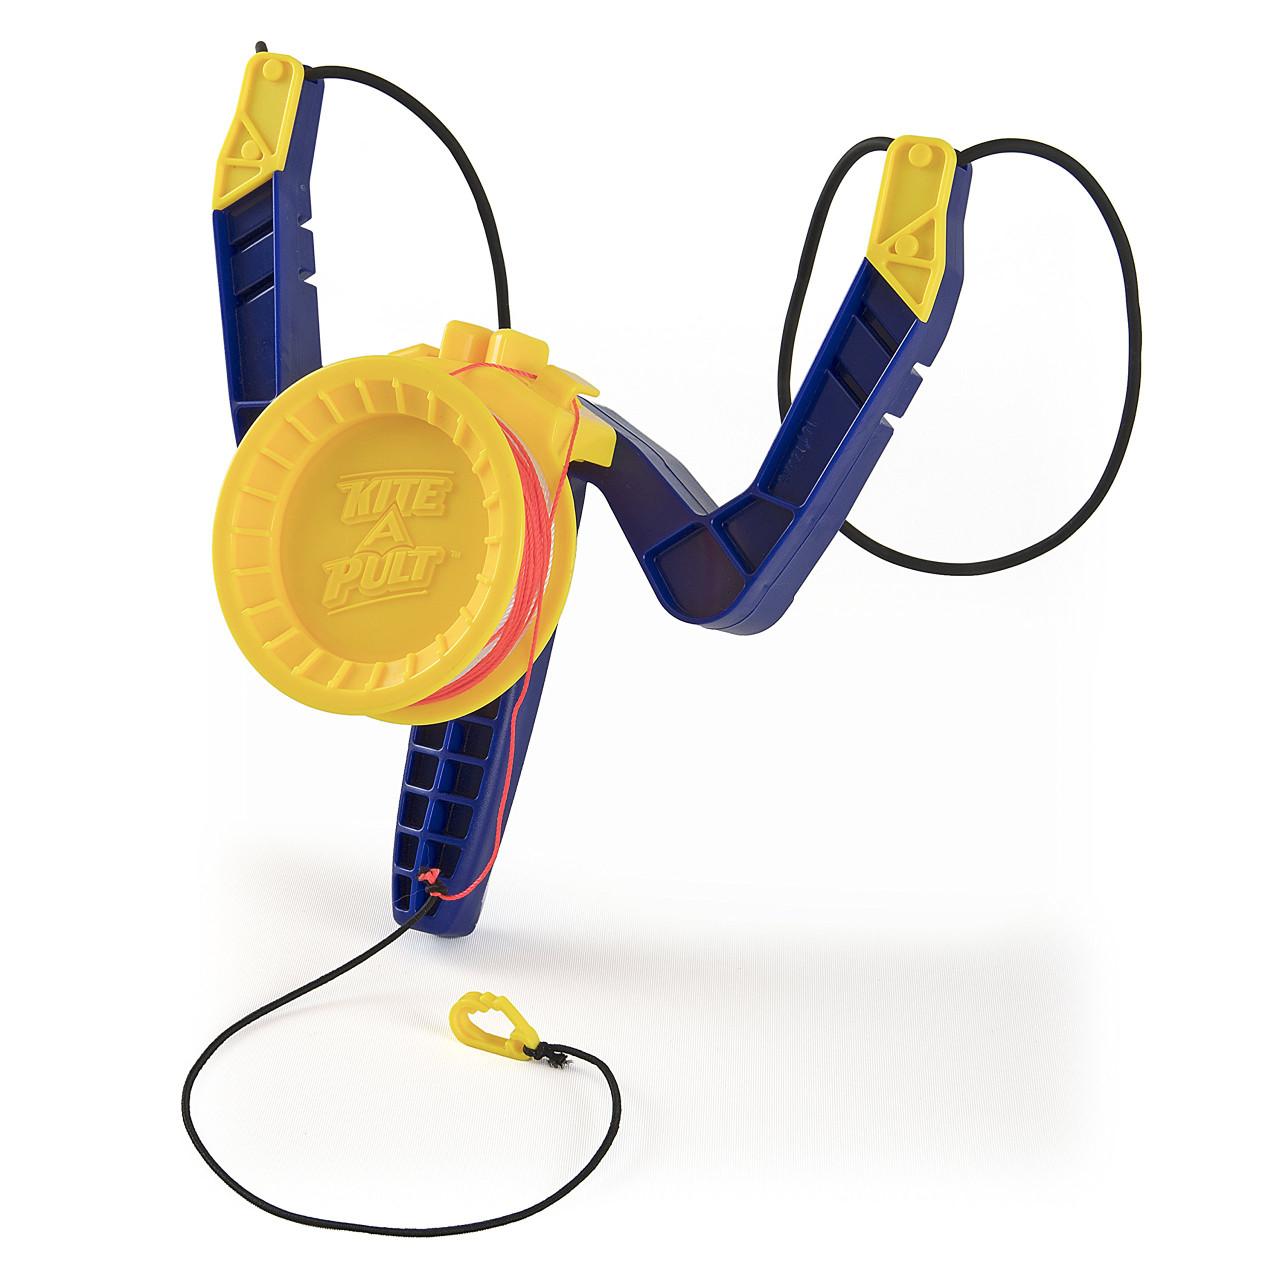 COOP Kite-a-Pult Launch Toy (2 Piece), Orange, 27.75 x 22 - Toys 4 U